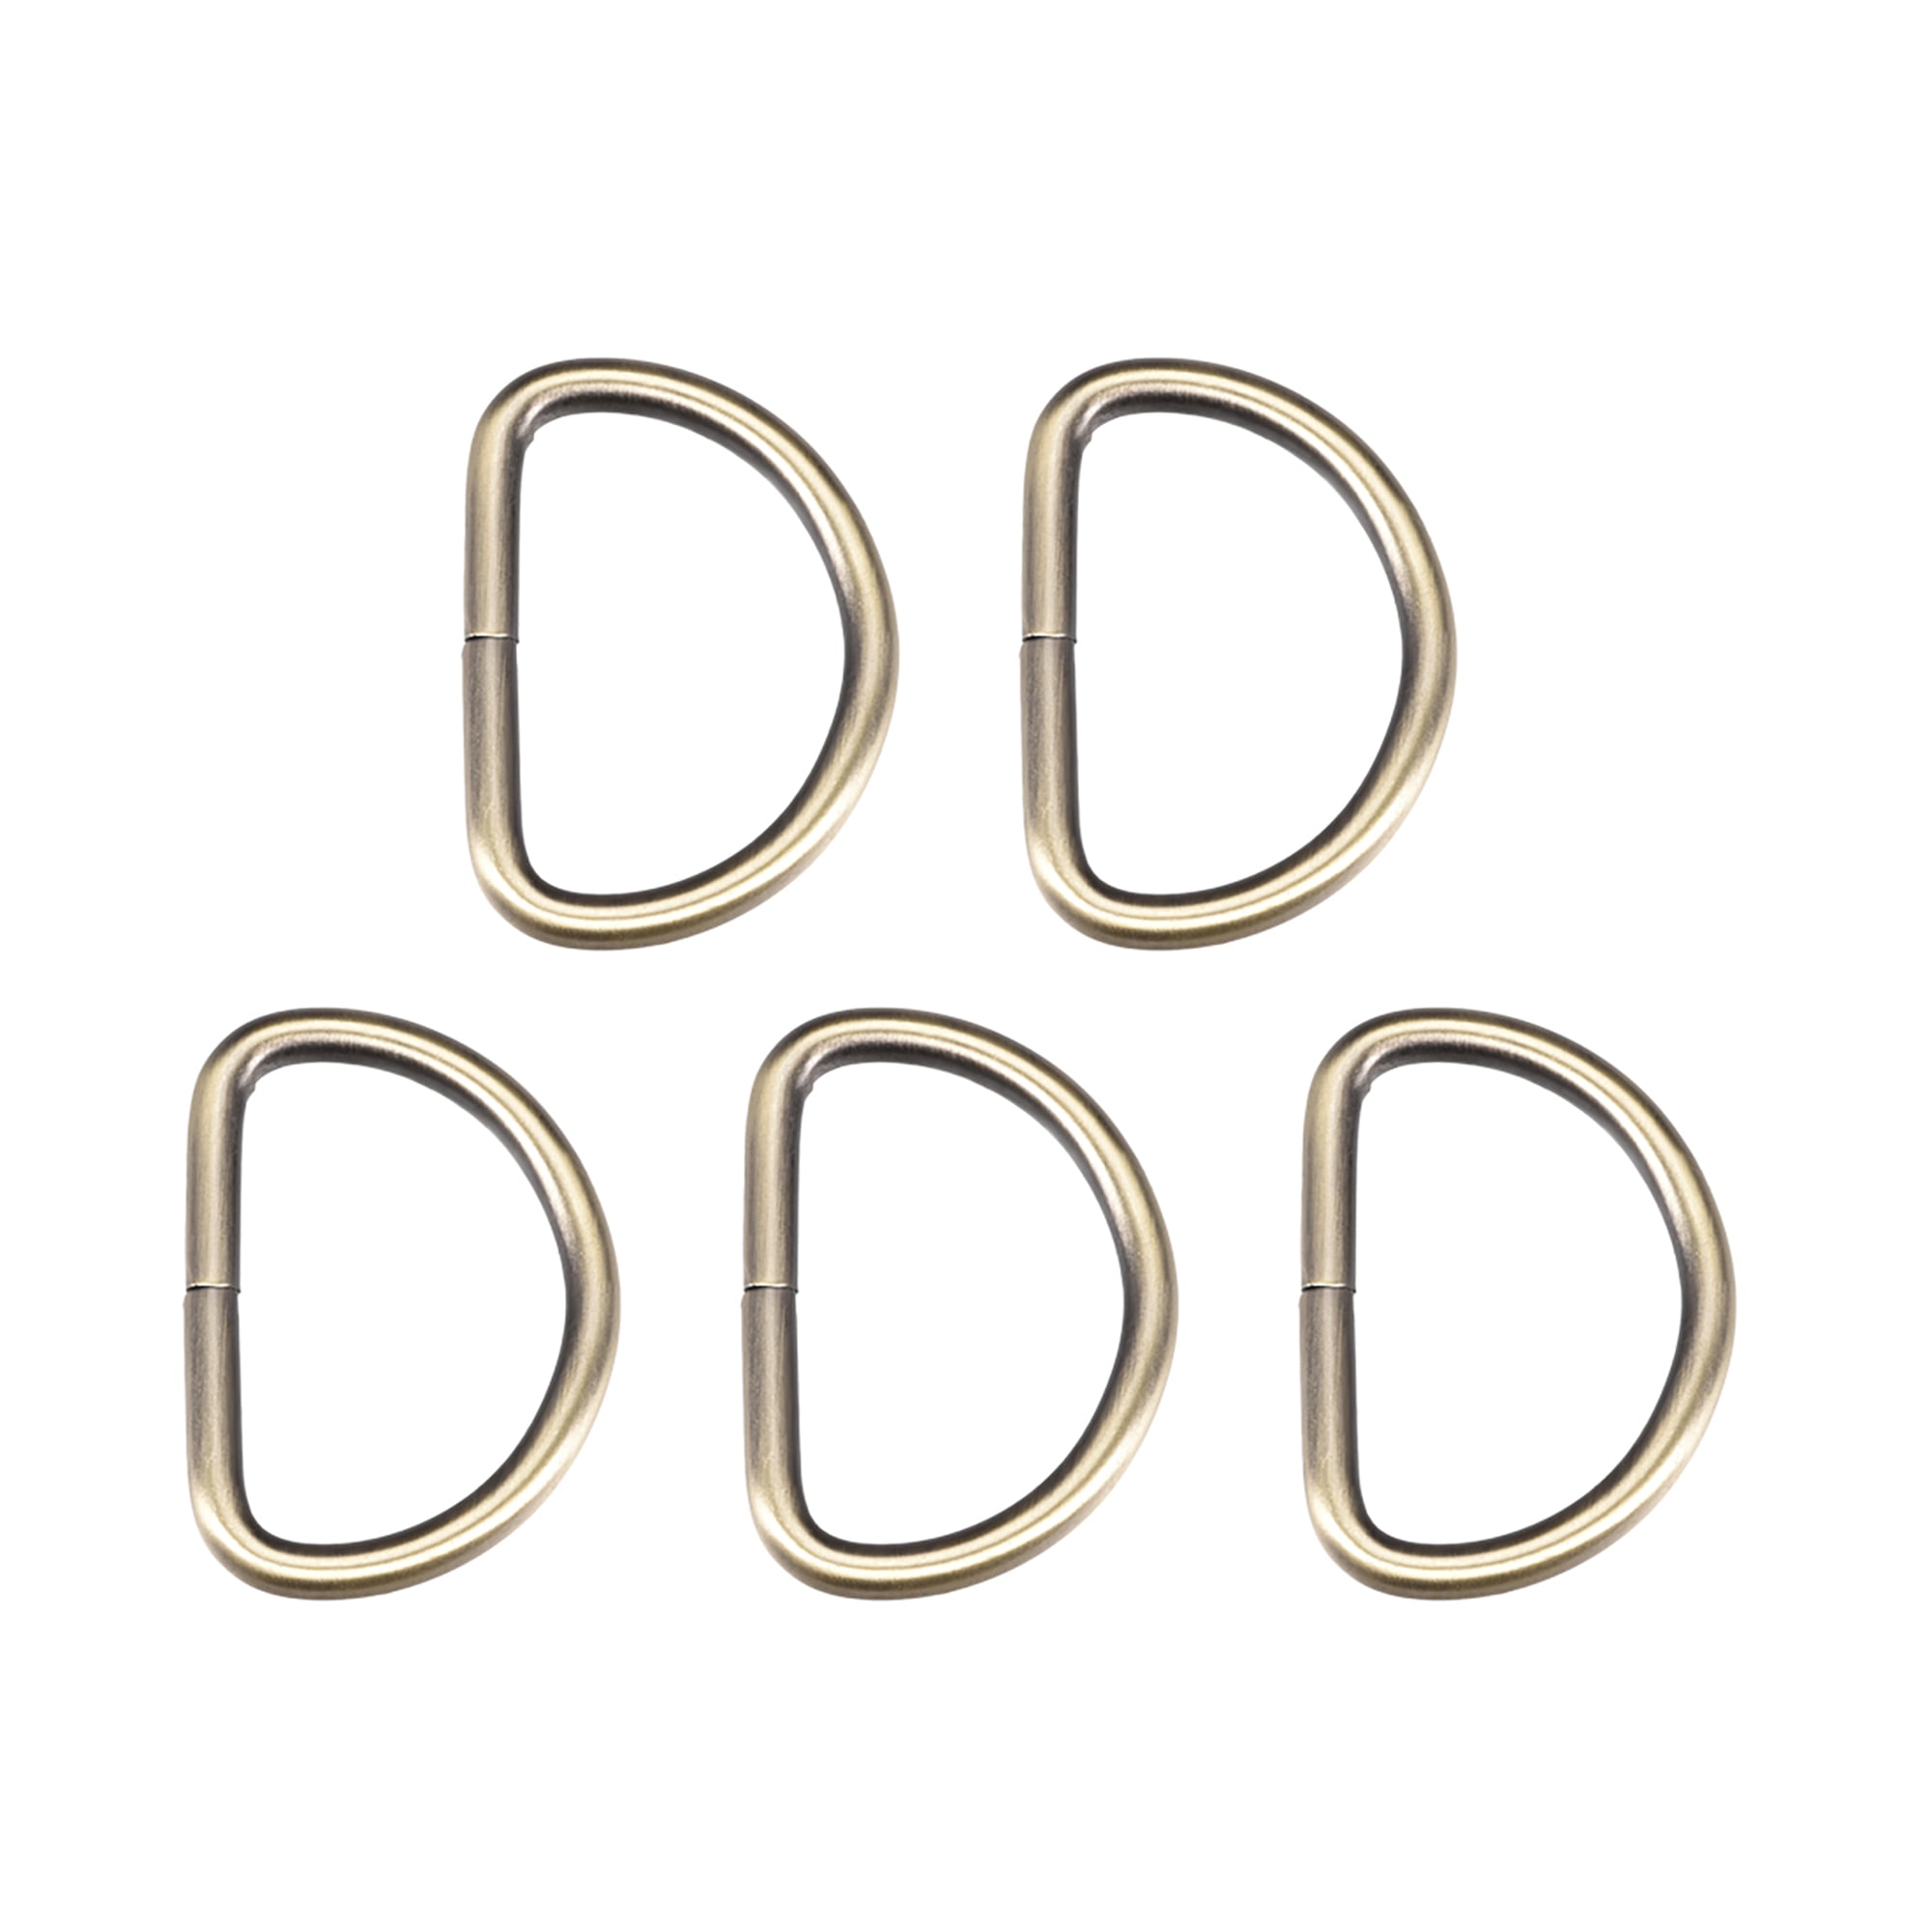 5 Pcs D Ring Buckle 1.6 Inch Metal Semi-Circular D-Ring Bronze Tone for ...